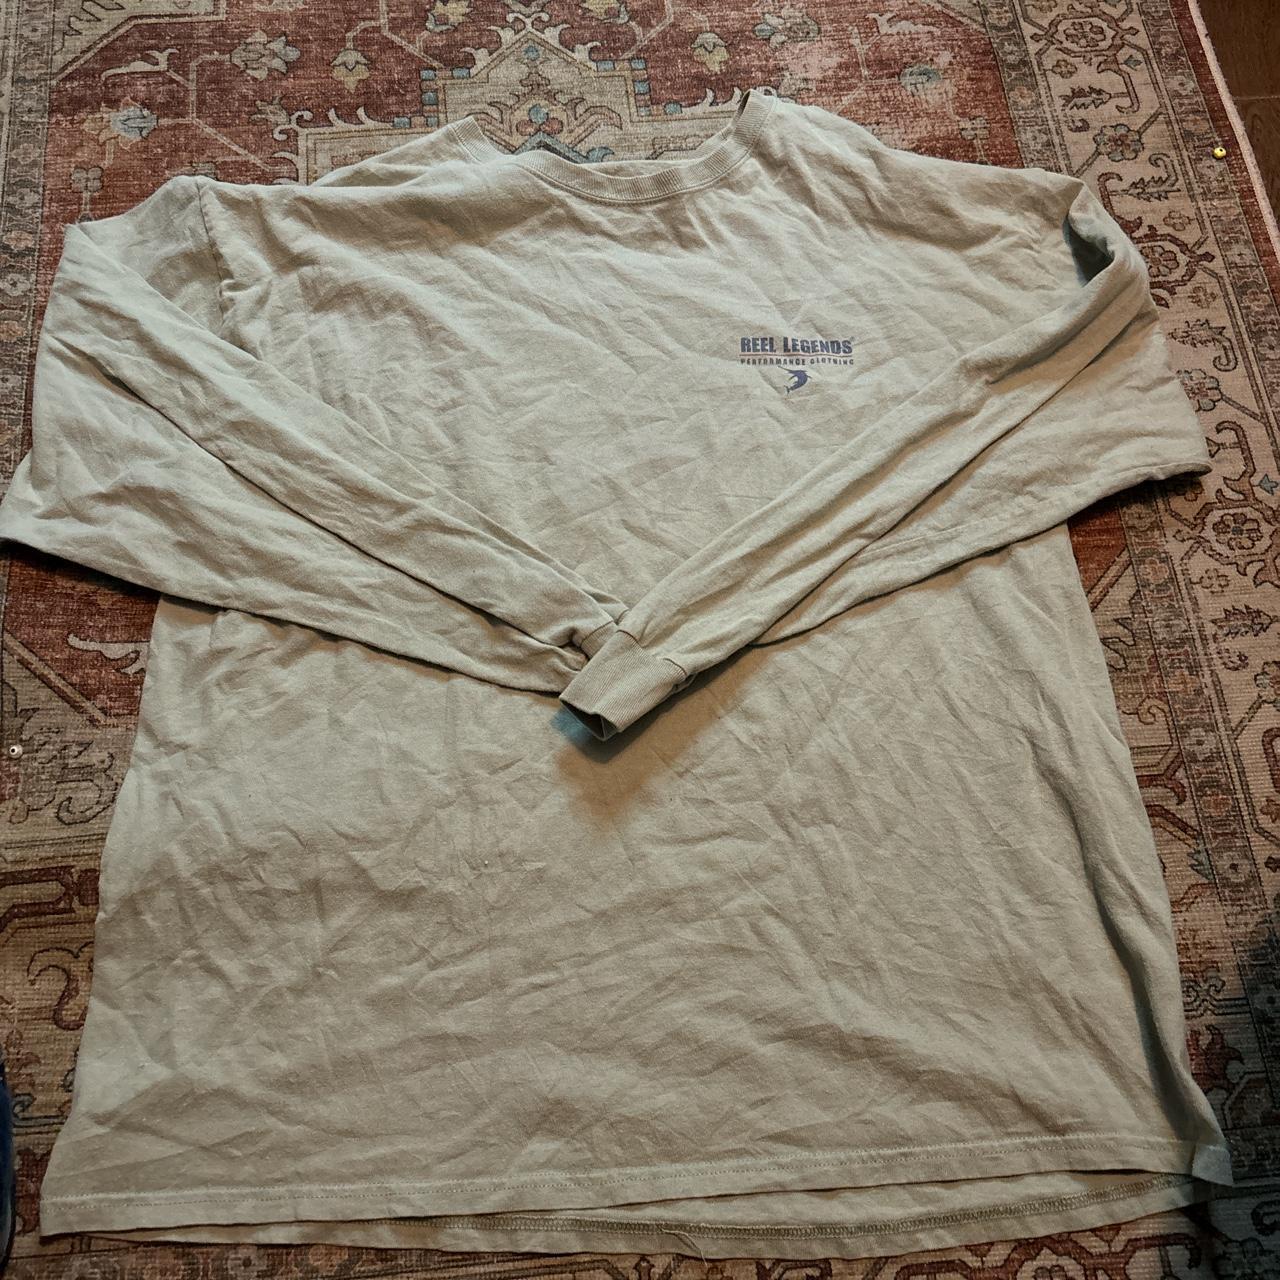 Long sleeve fishing shirt, REEL, legends, beefy, - Depop